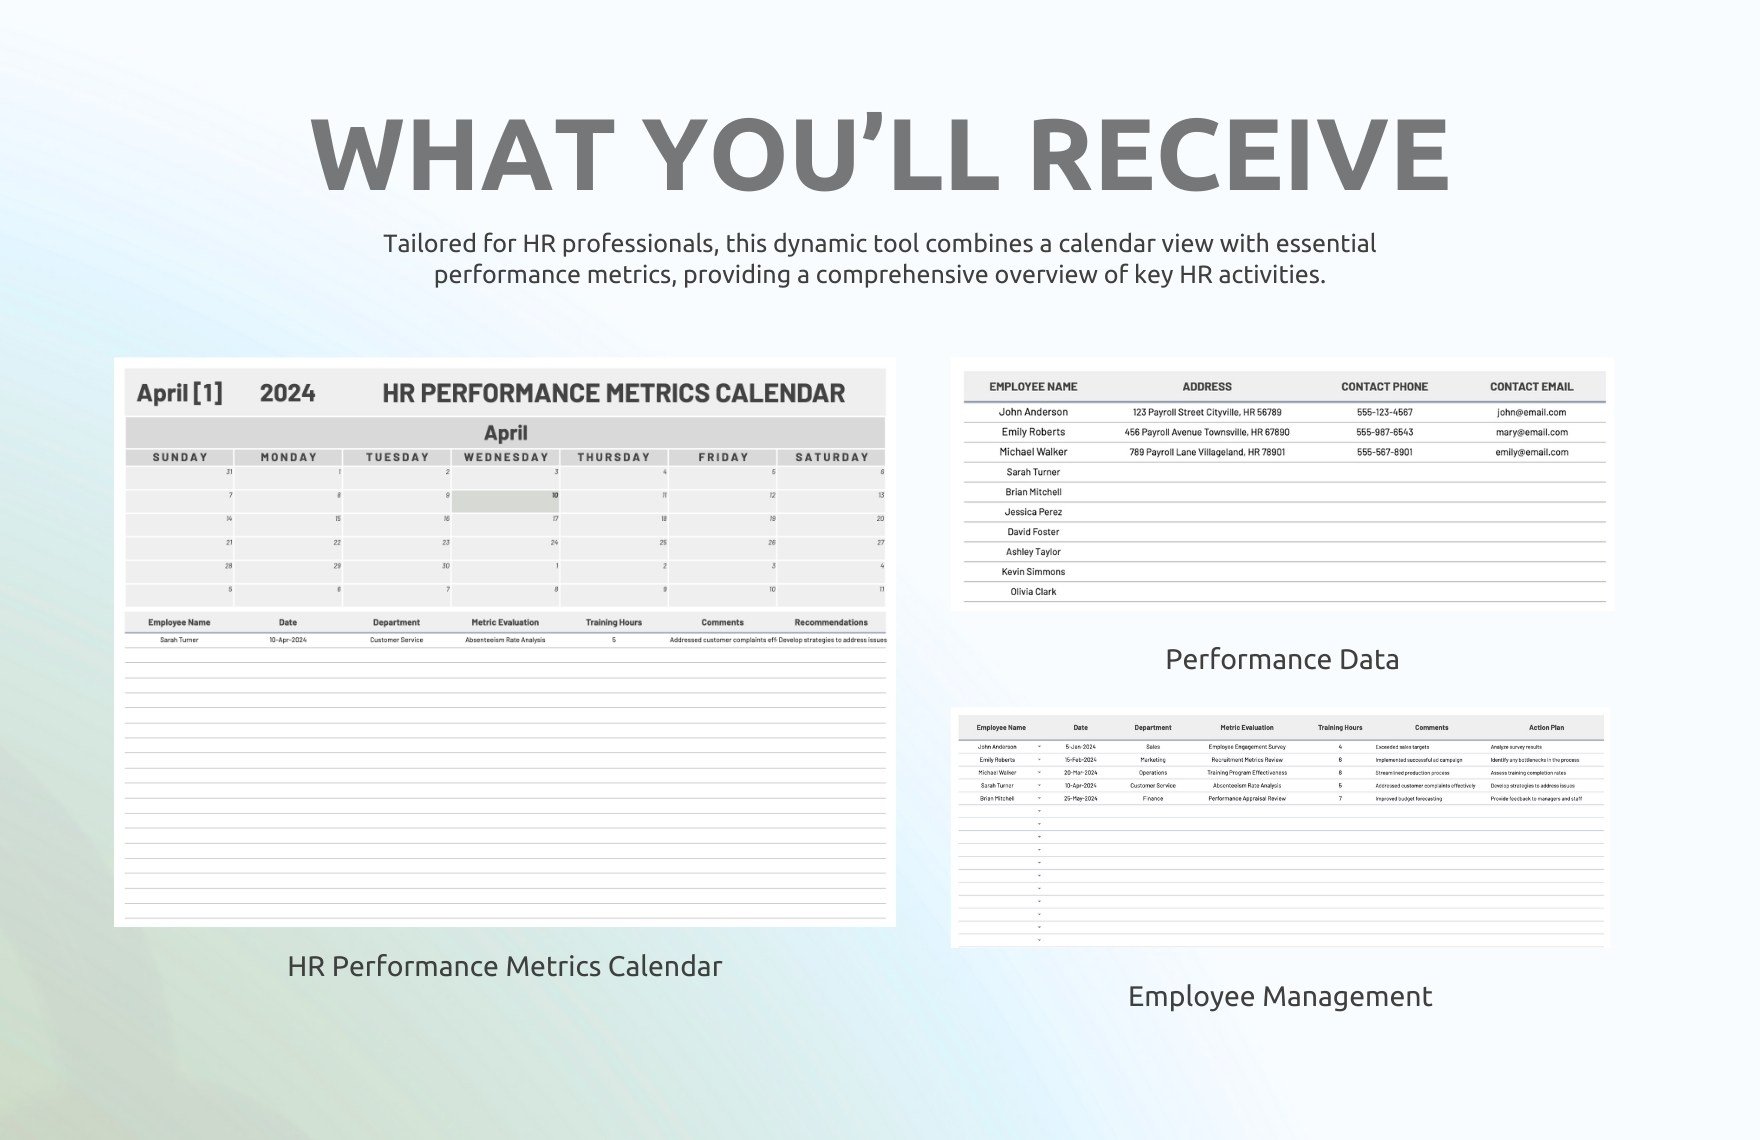 HR Performance Metrics Calendar Template